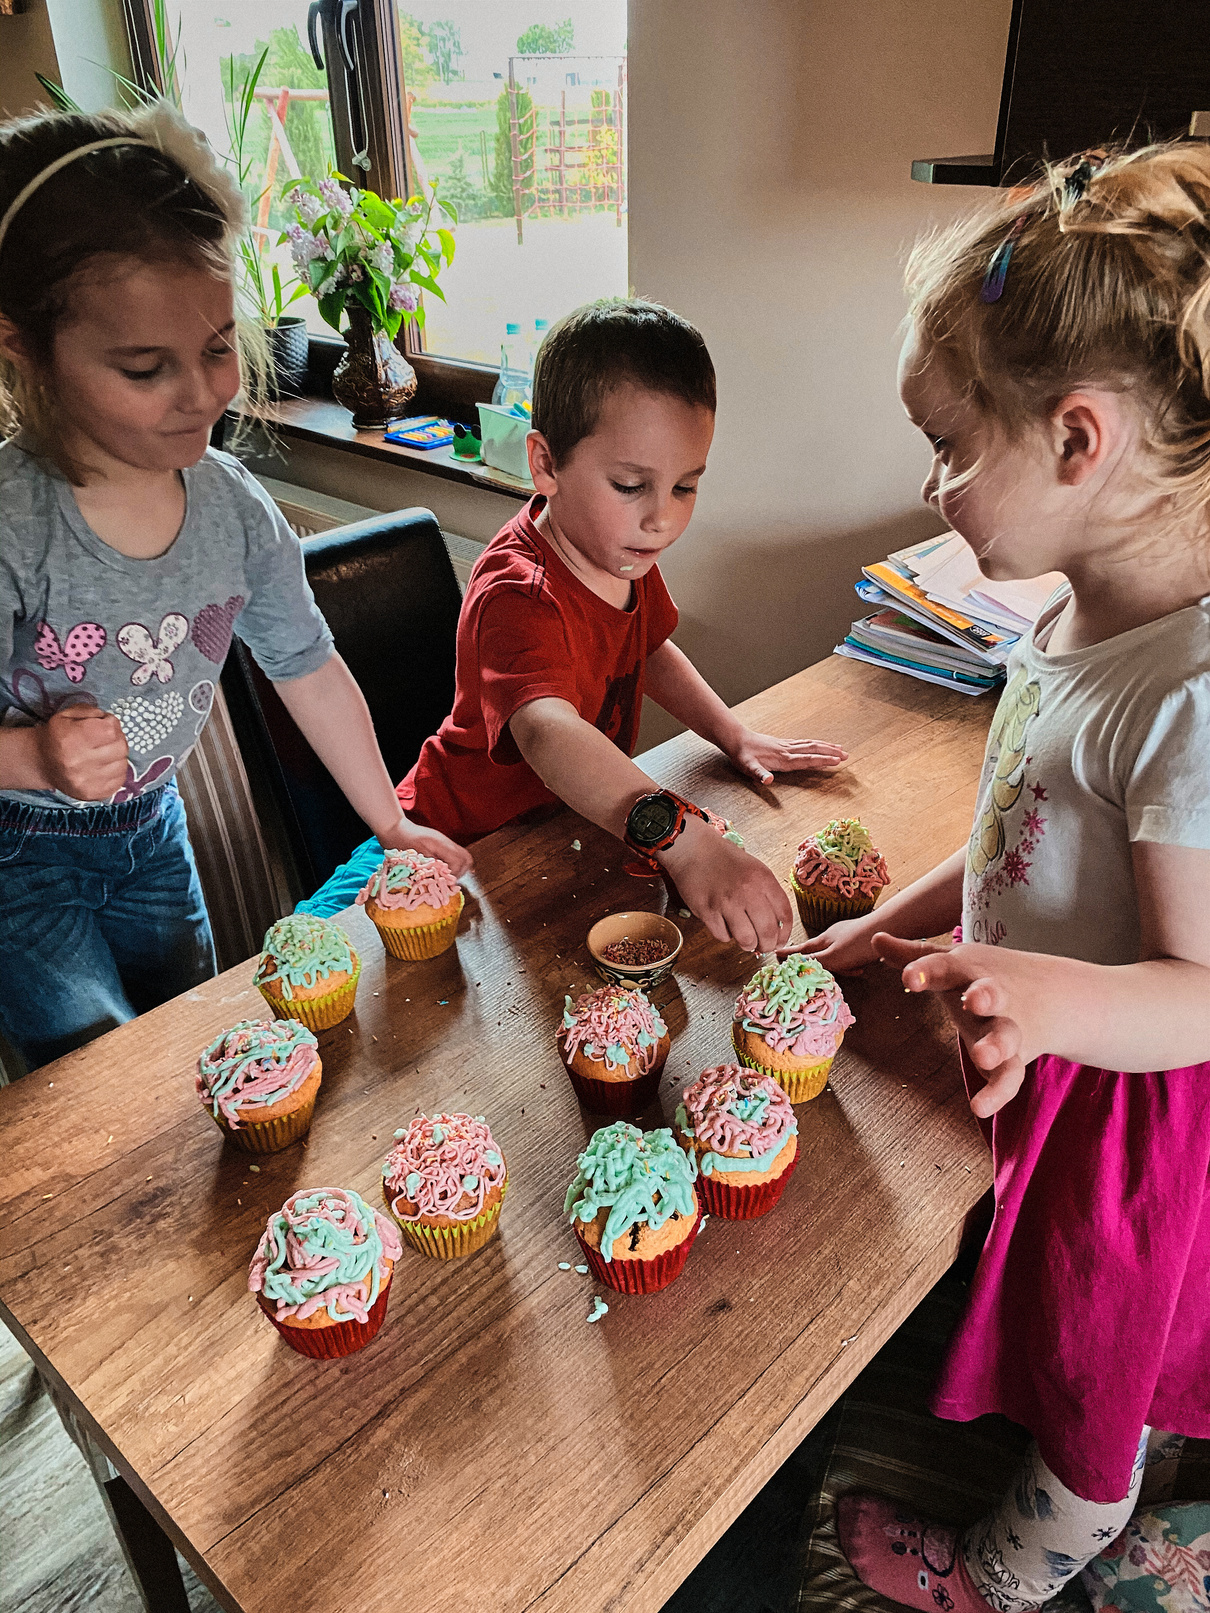 Kids Decorating Cupcakes with Sprinkles 